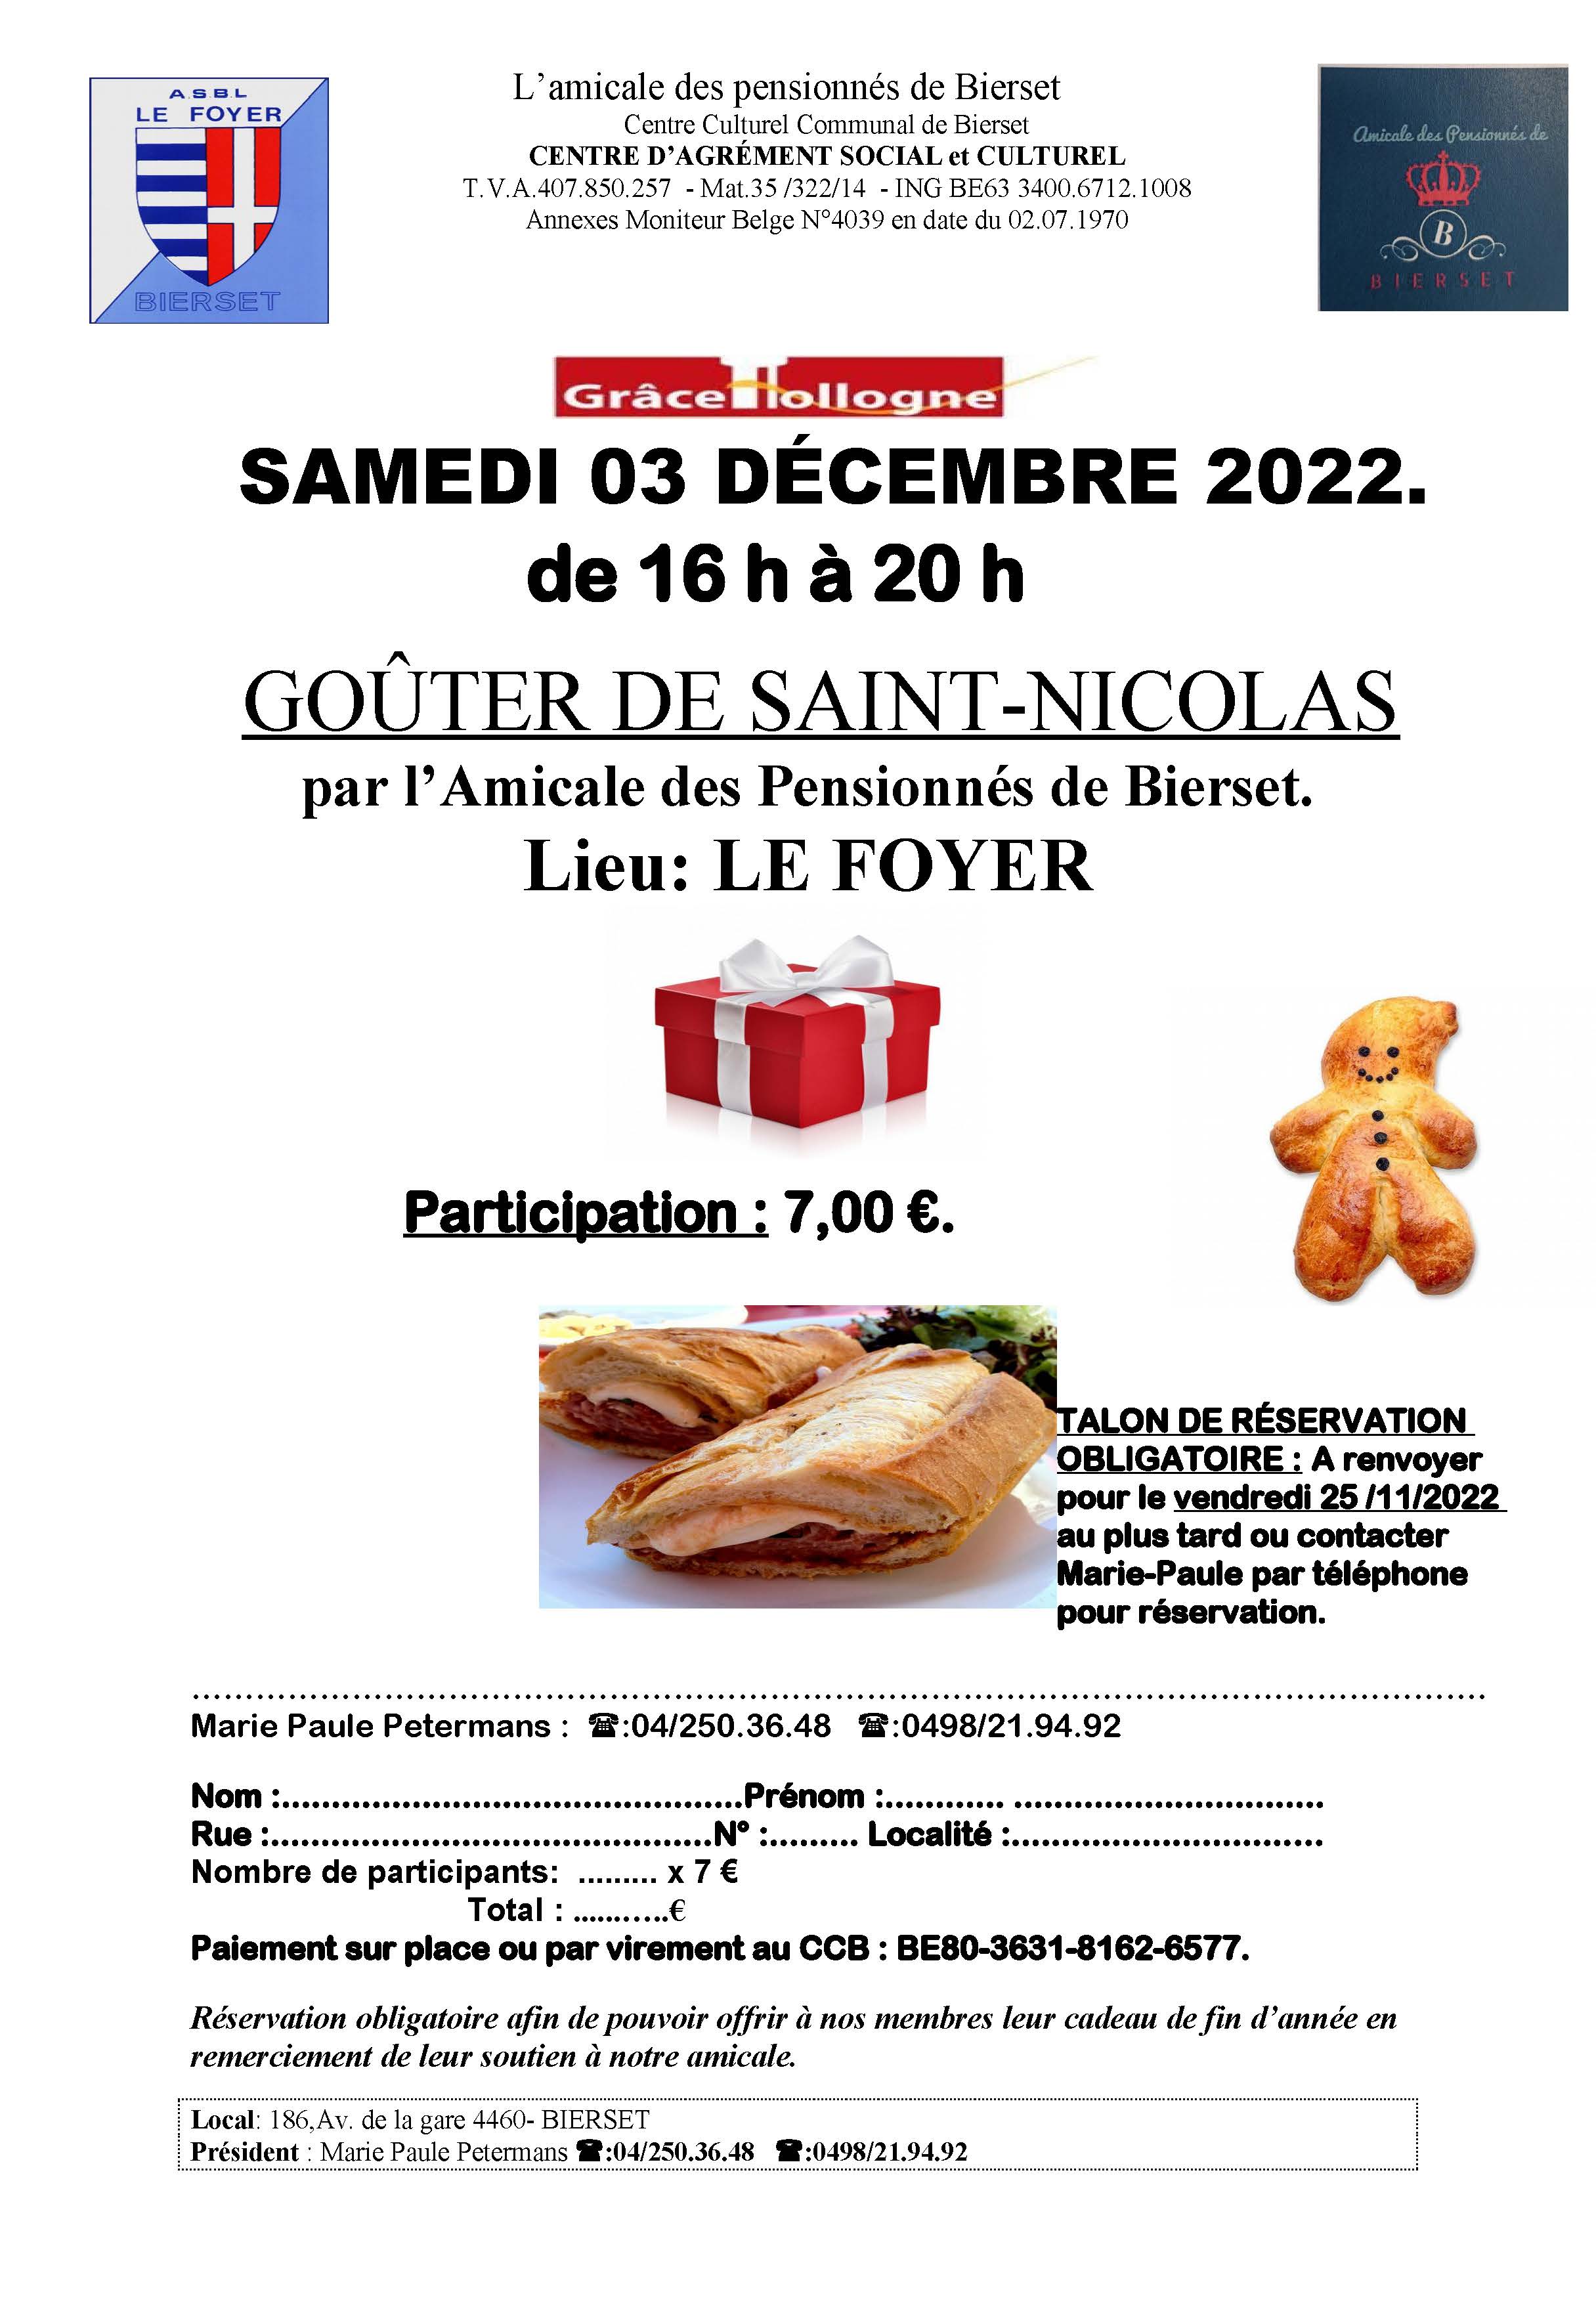 2022_12_03_gouter_saint_nicolas_amicale_pensionnes_2022_ok_ok.jpg